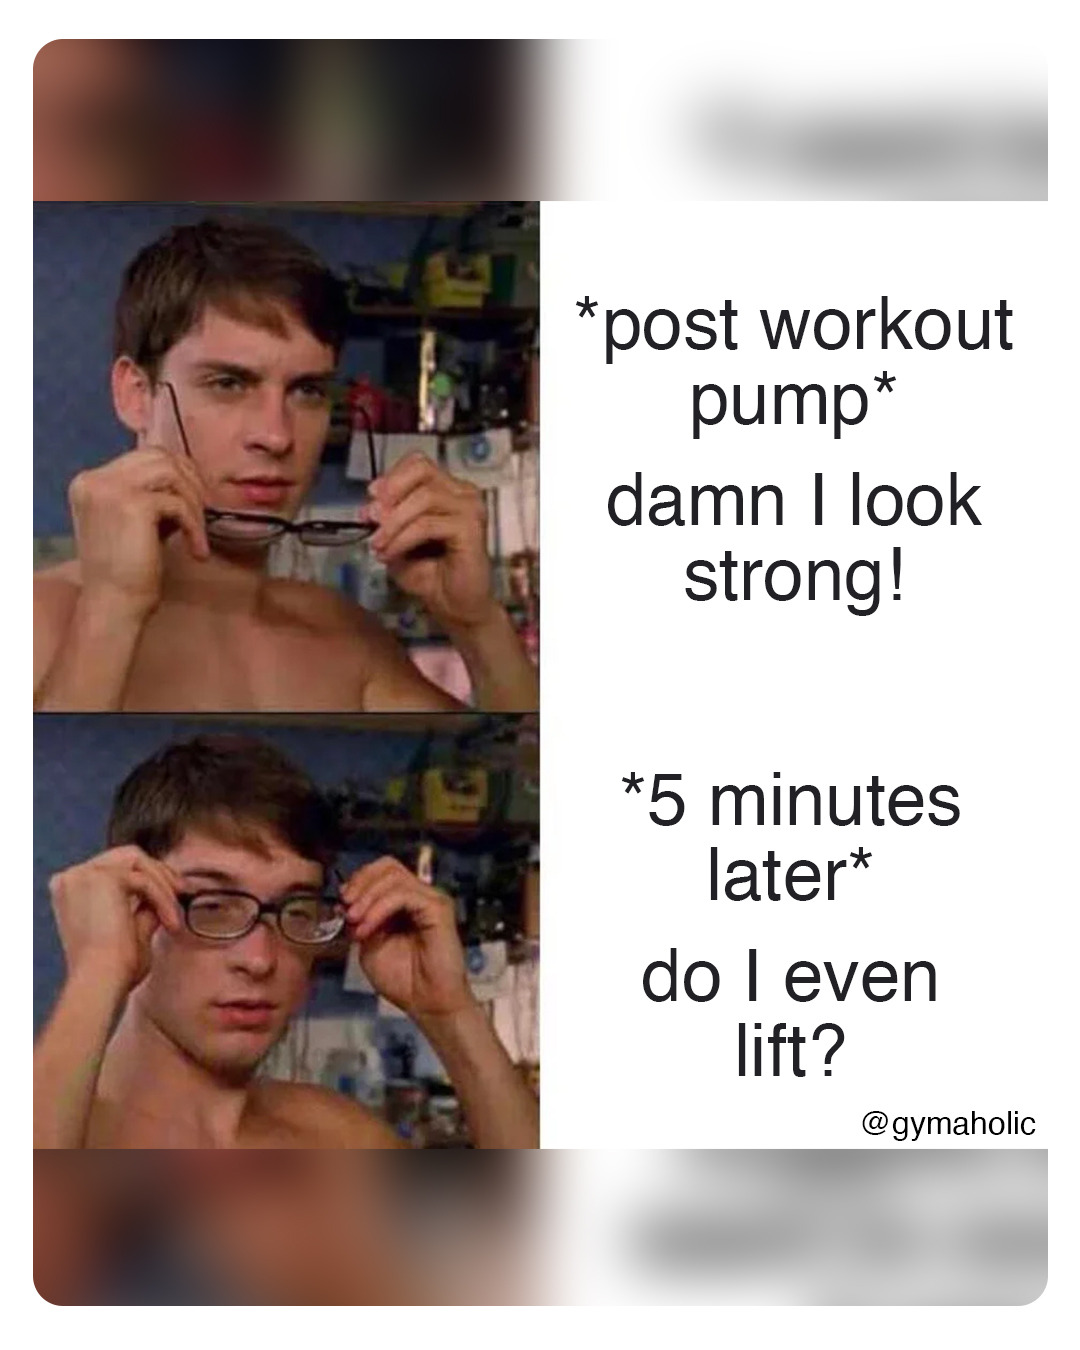 post workout pump: damn I look strong!